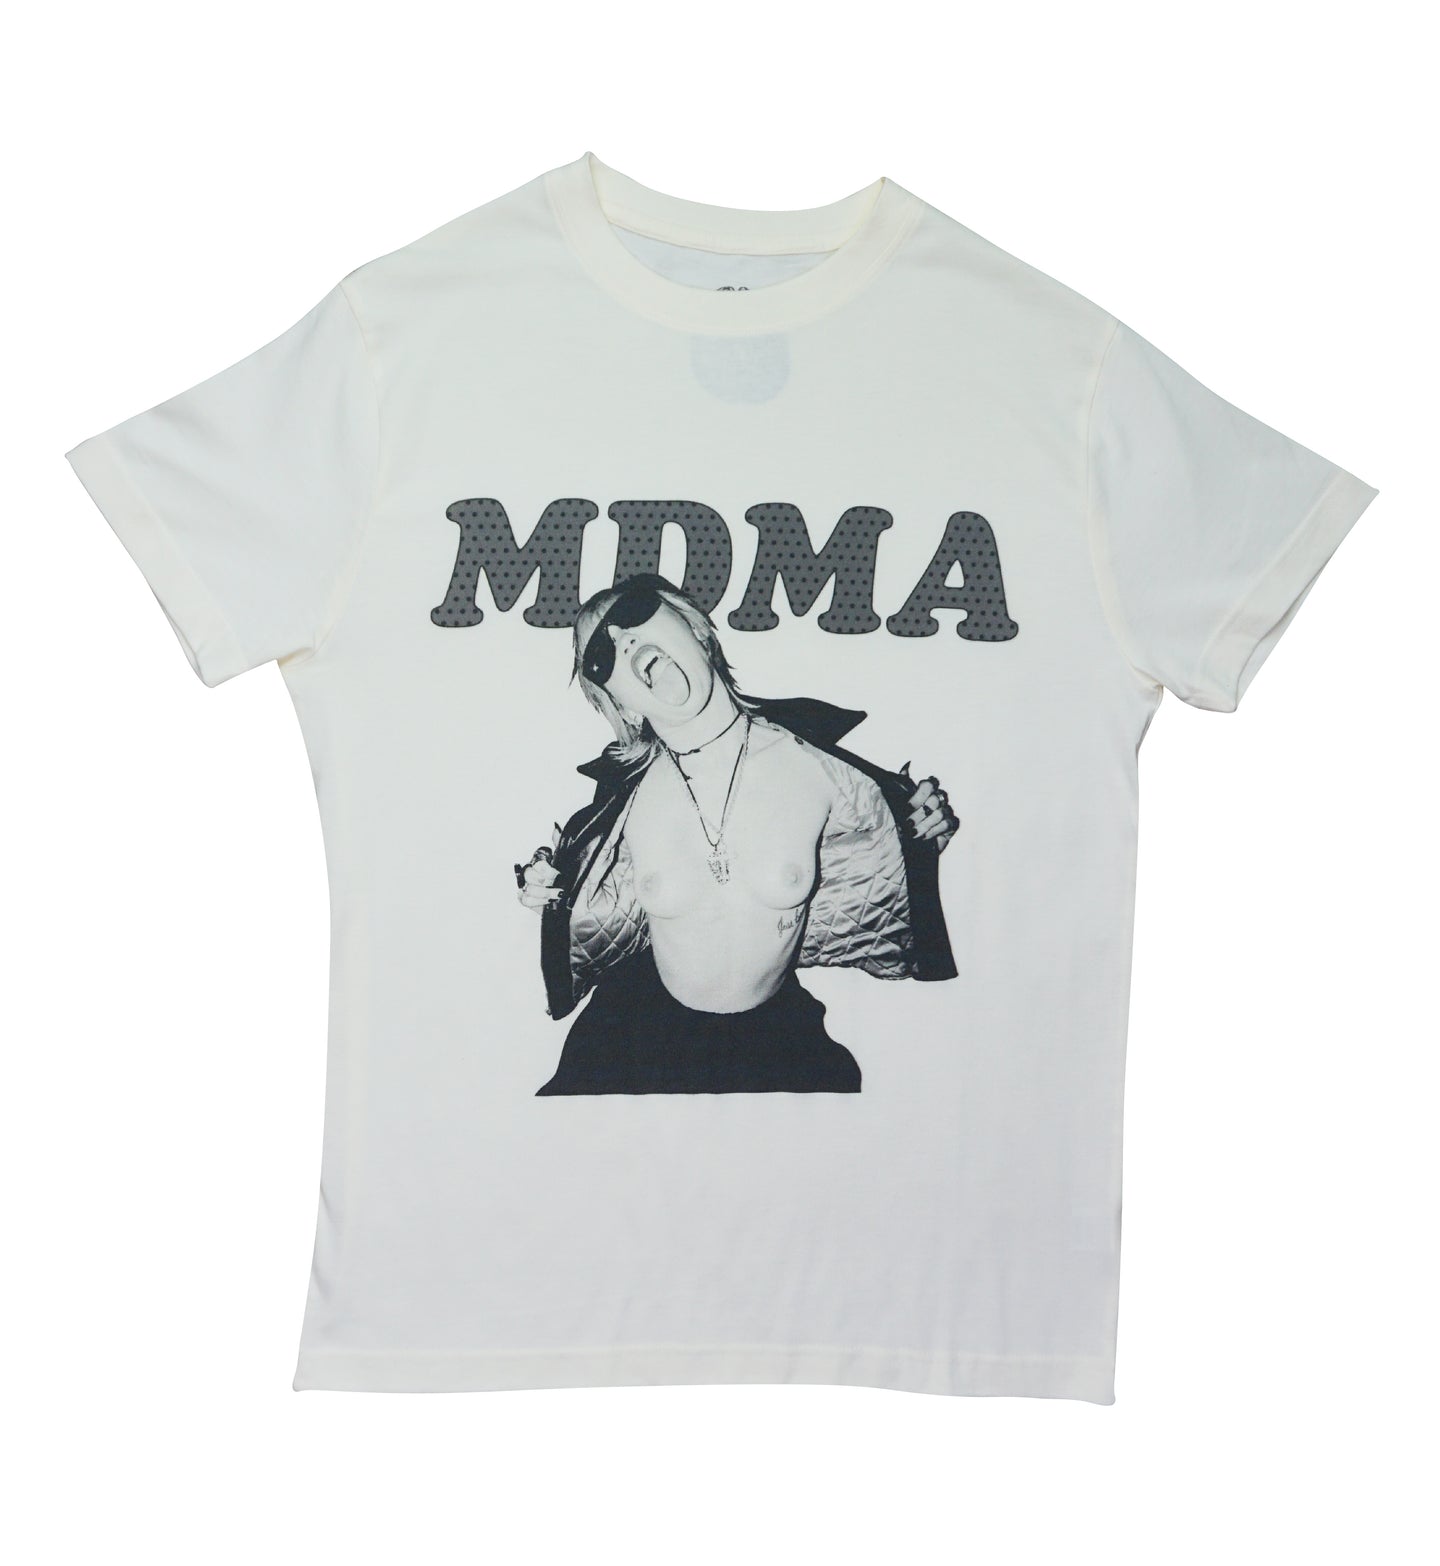 MDMA Flashing Miley Cyrus Tee Shirt Bone